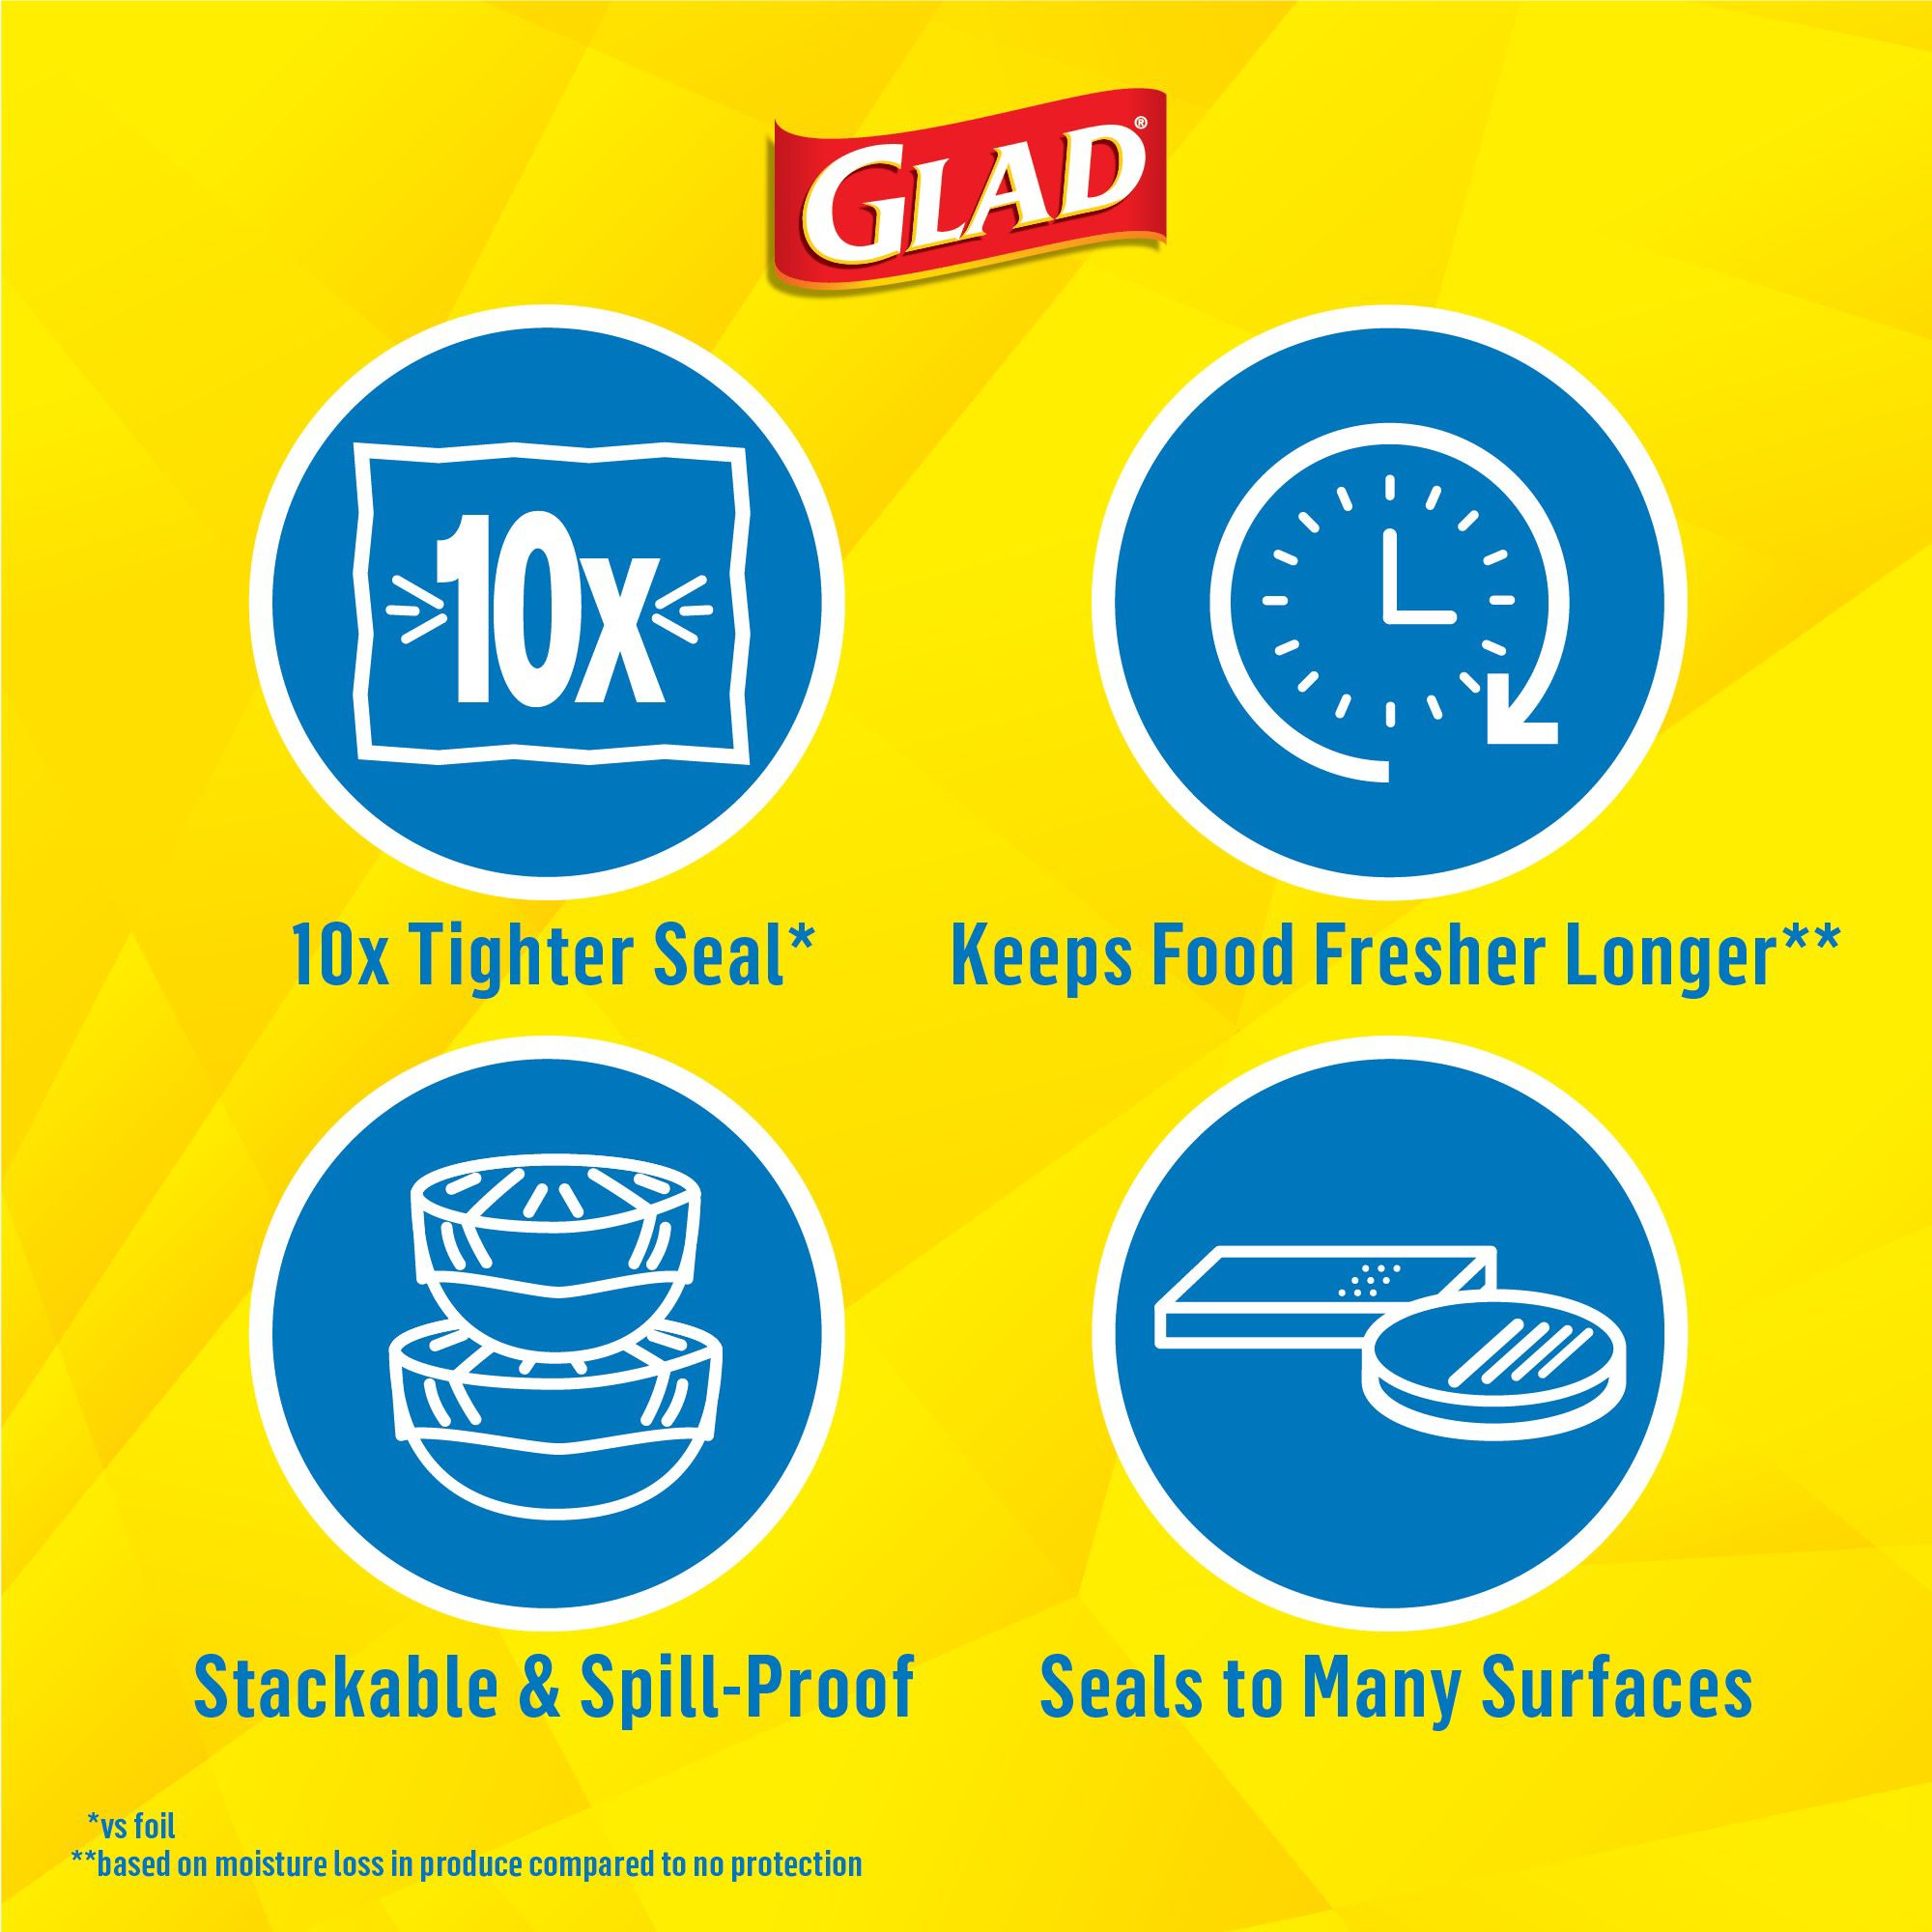 Glad Press N Seal Plastic Wrap, 2 pk./140 sq. ft.